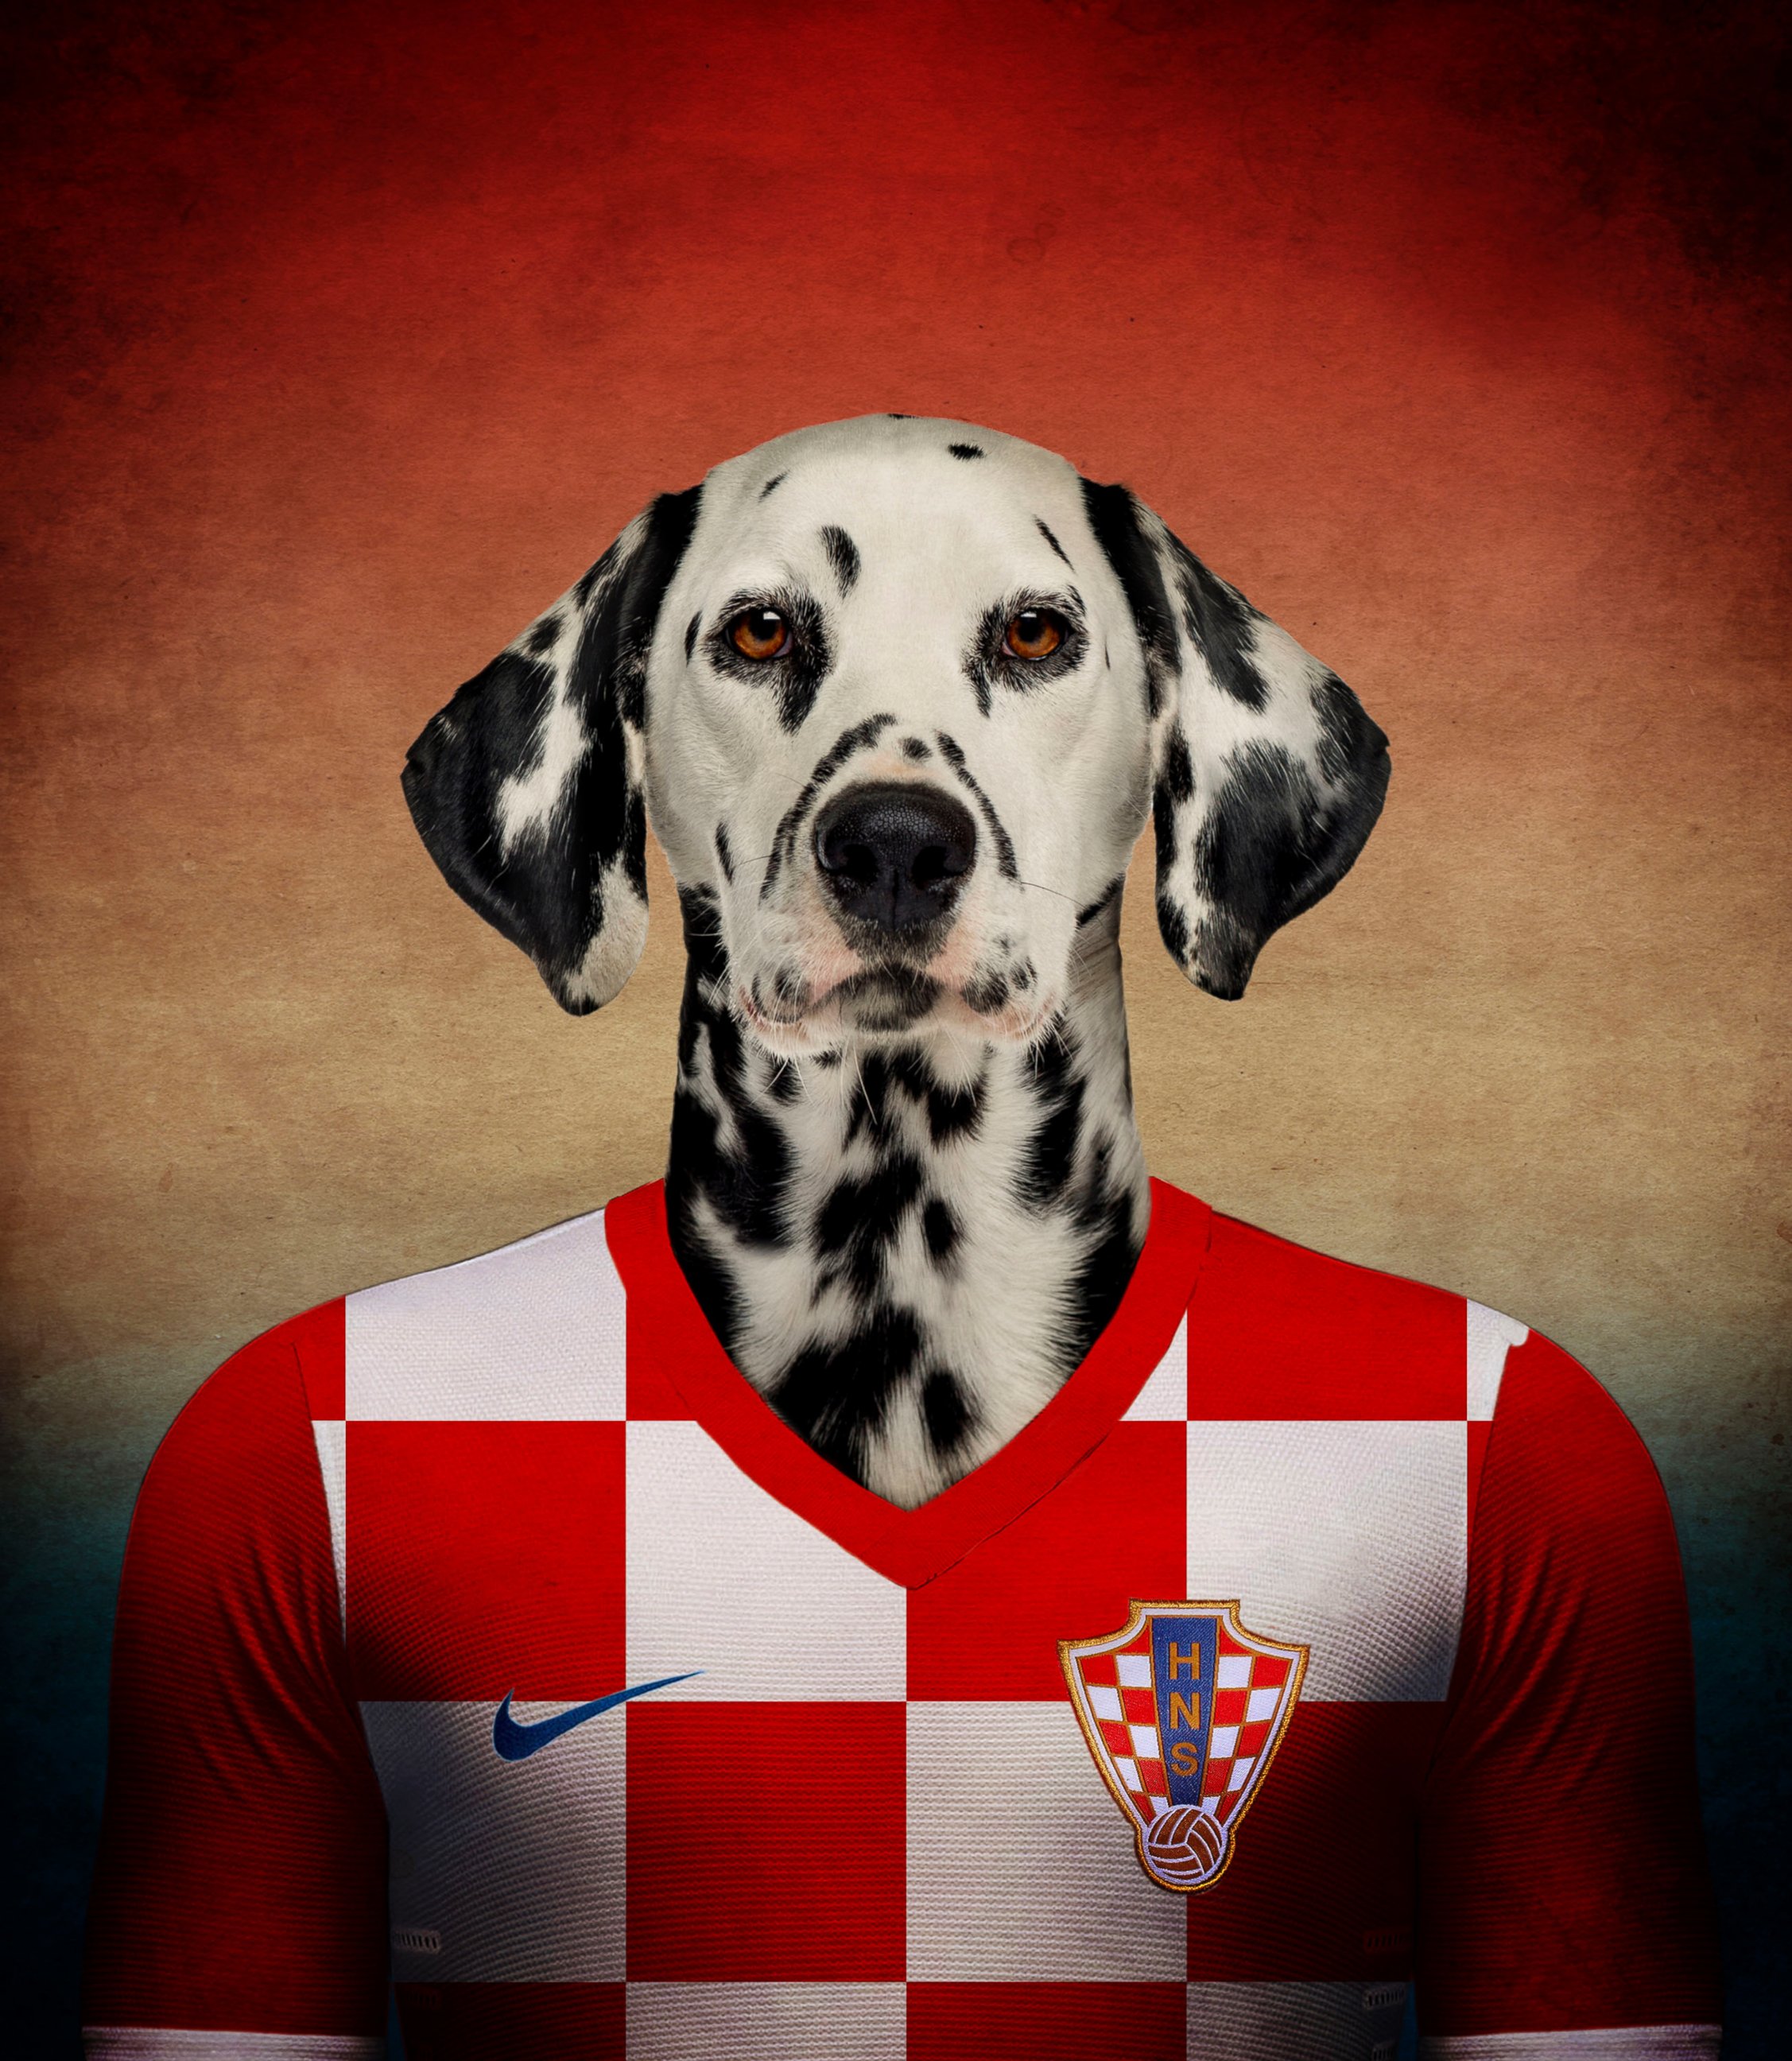 Dogs cup. Собака футболист. Собака в форме футболиста. Крутая собака. Псина футболист.